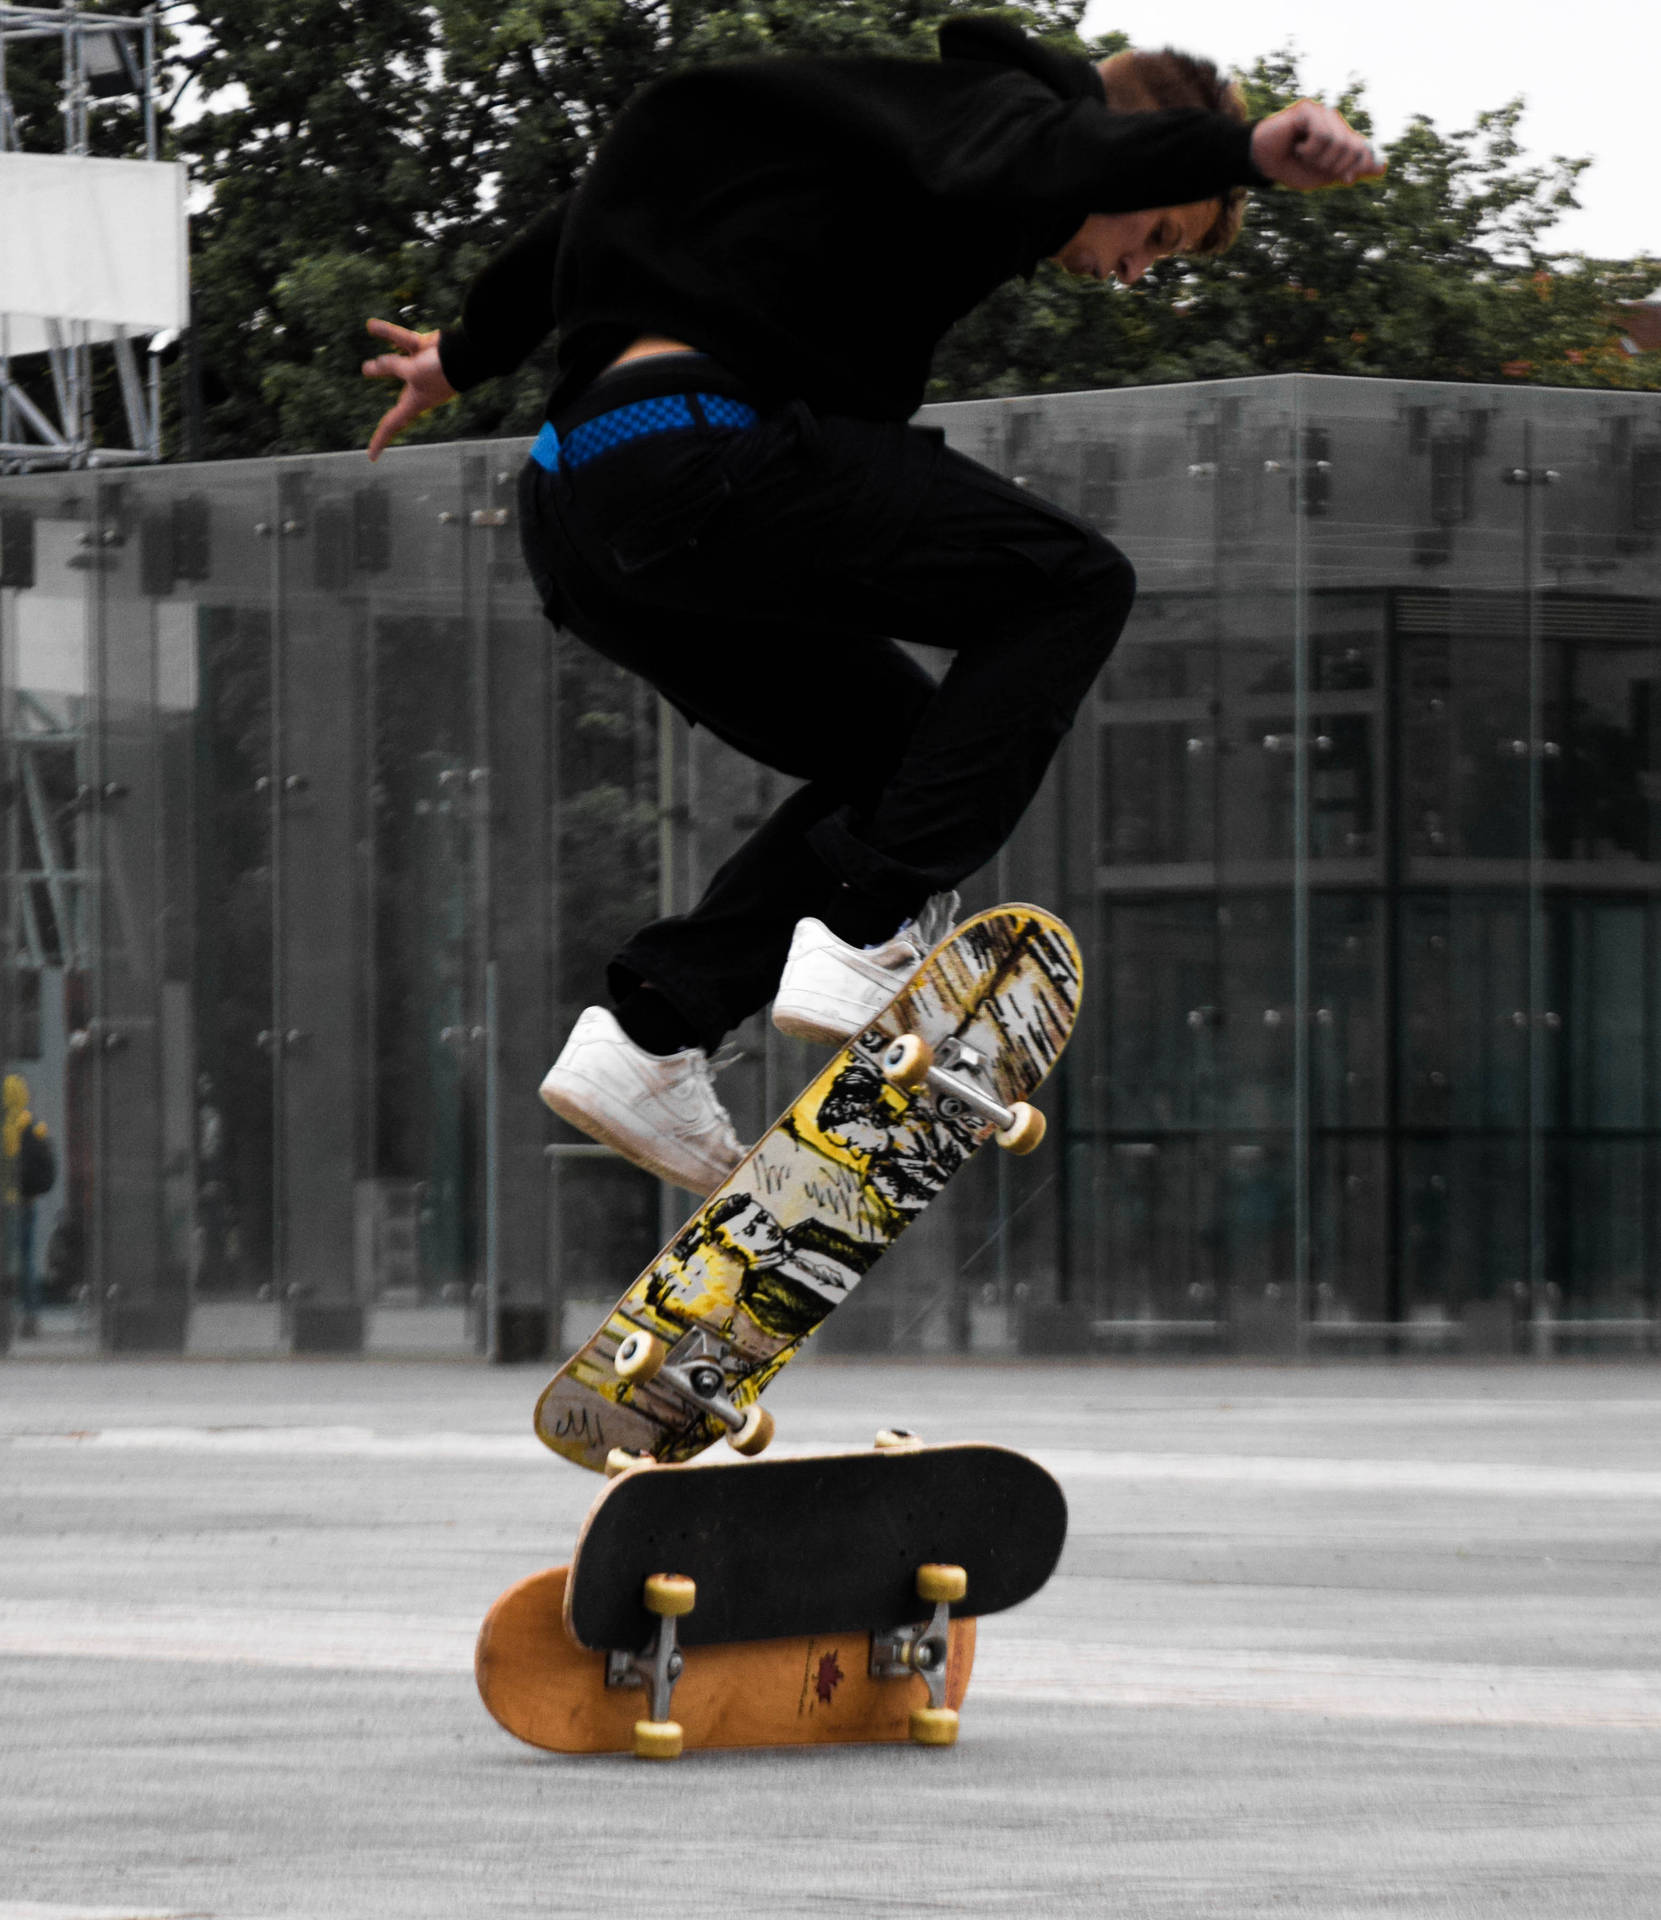 Ollie Trick On Skateboard Background